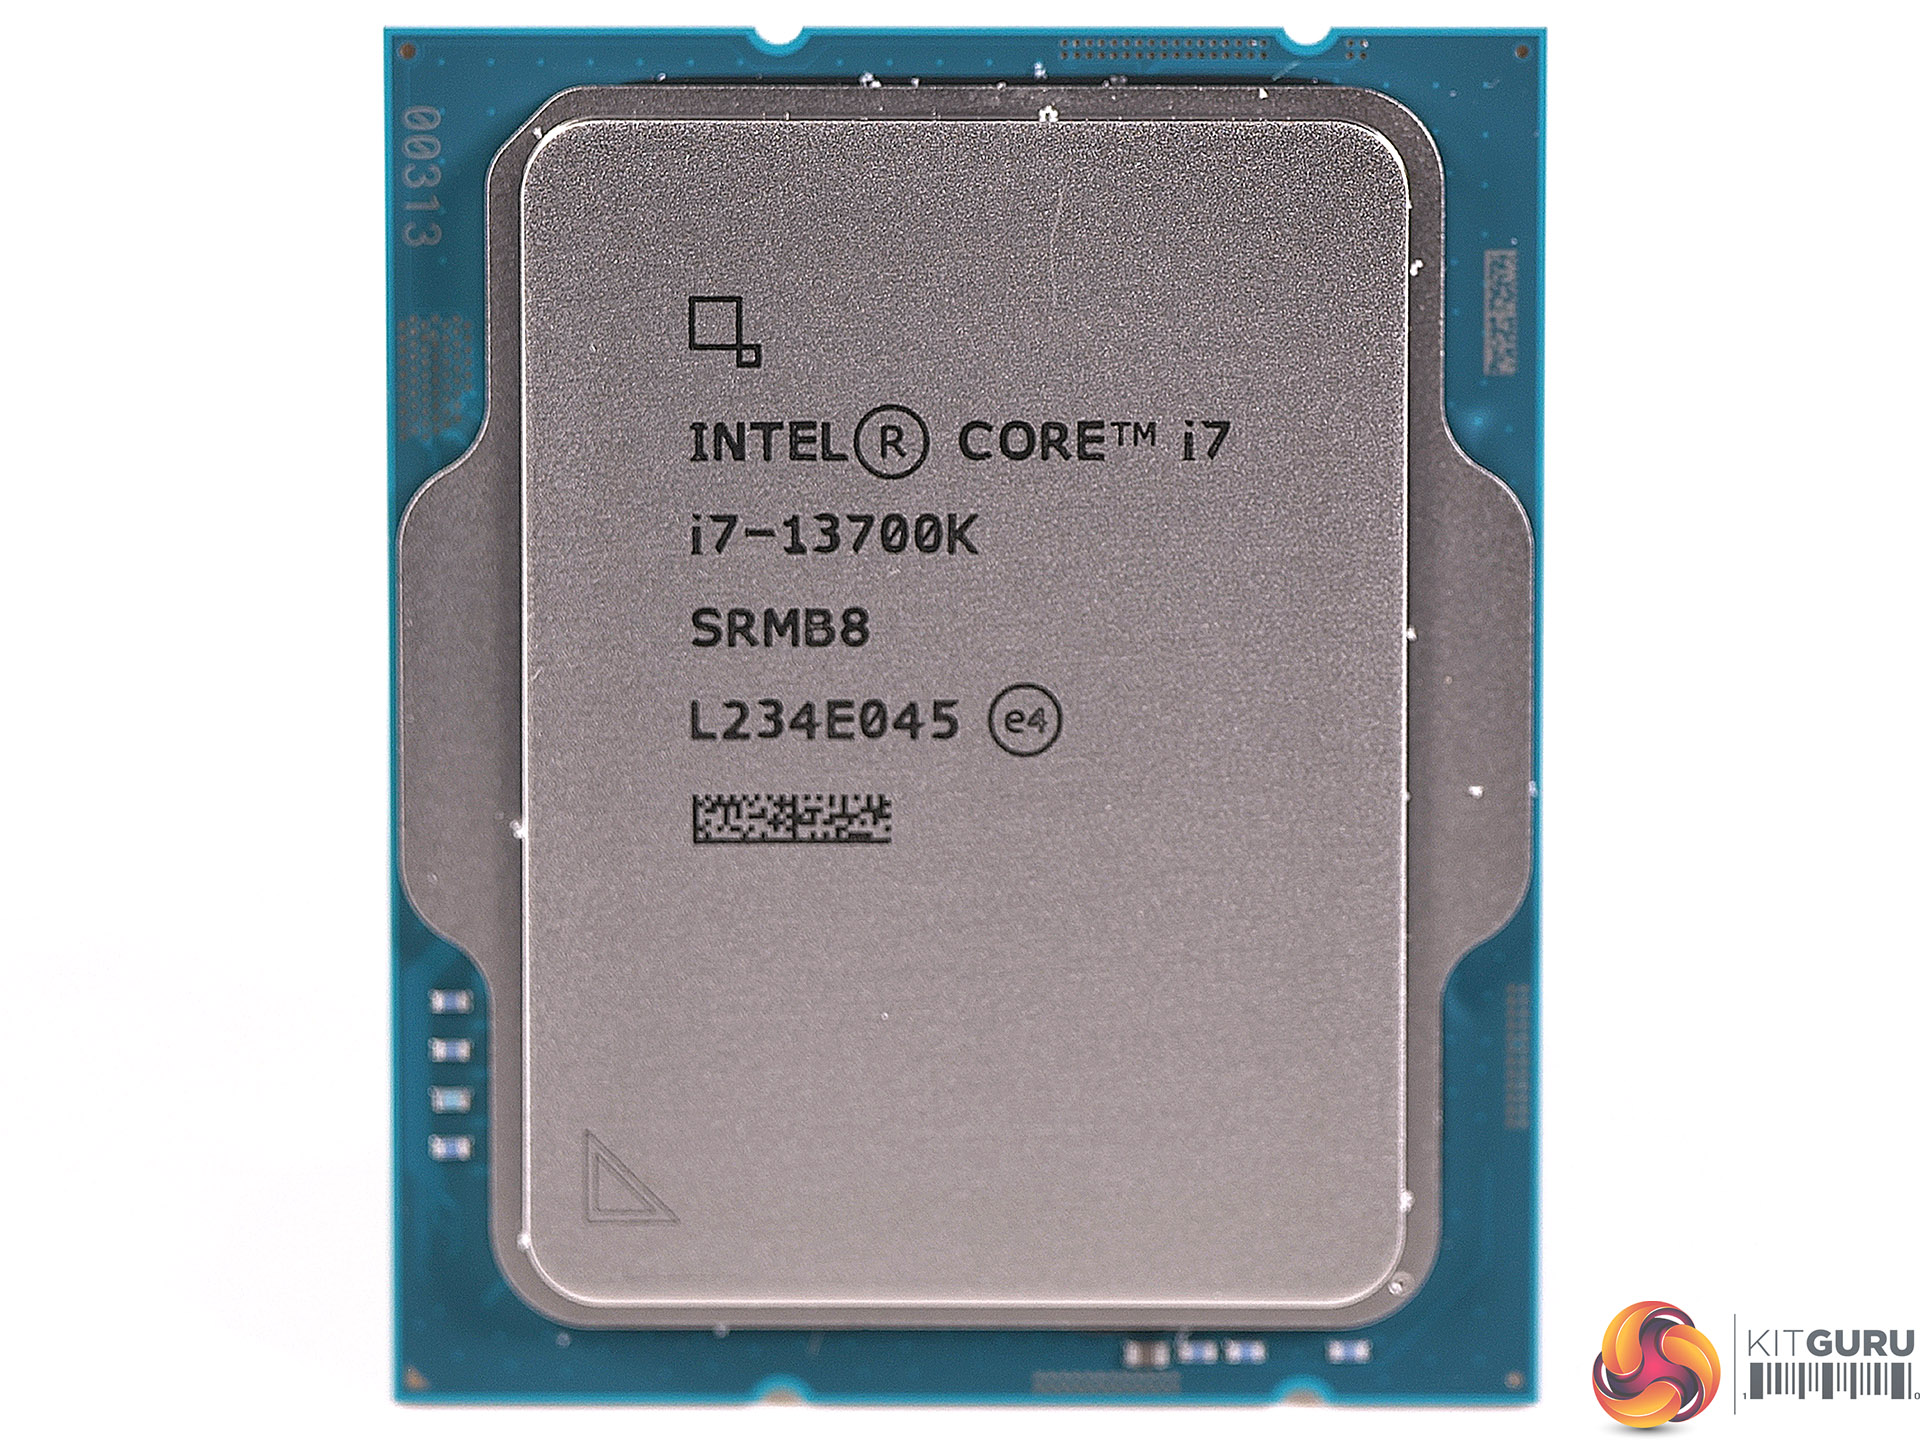 Intel Core i7-13700K Review | KitGuru